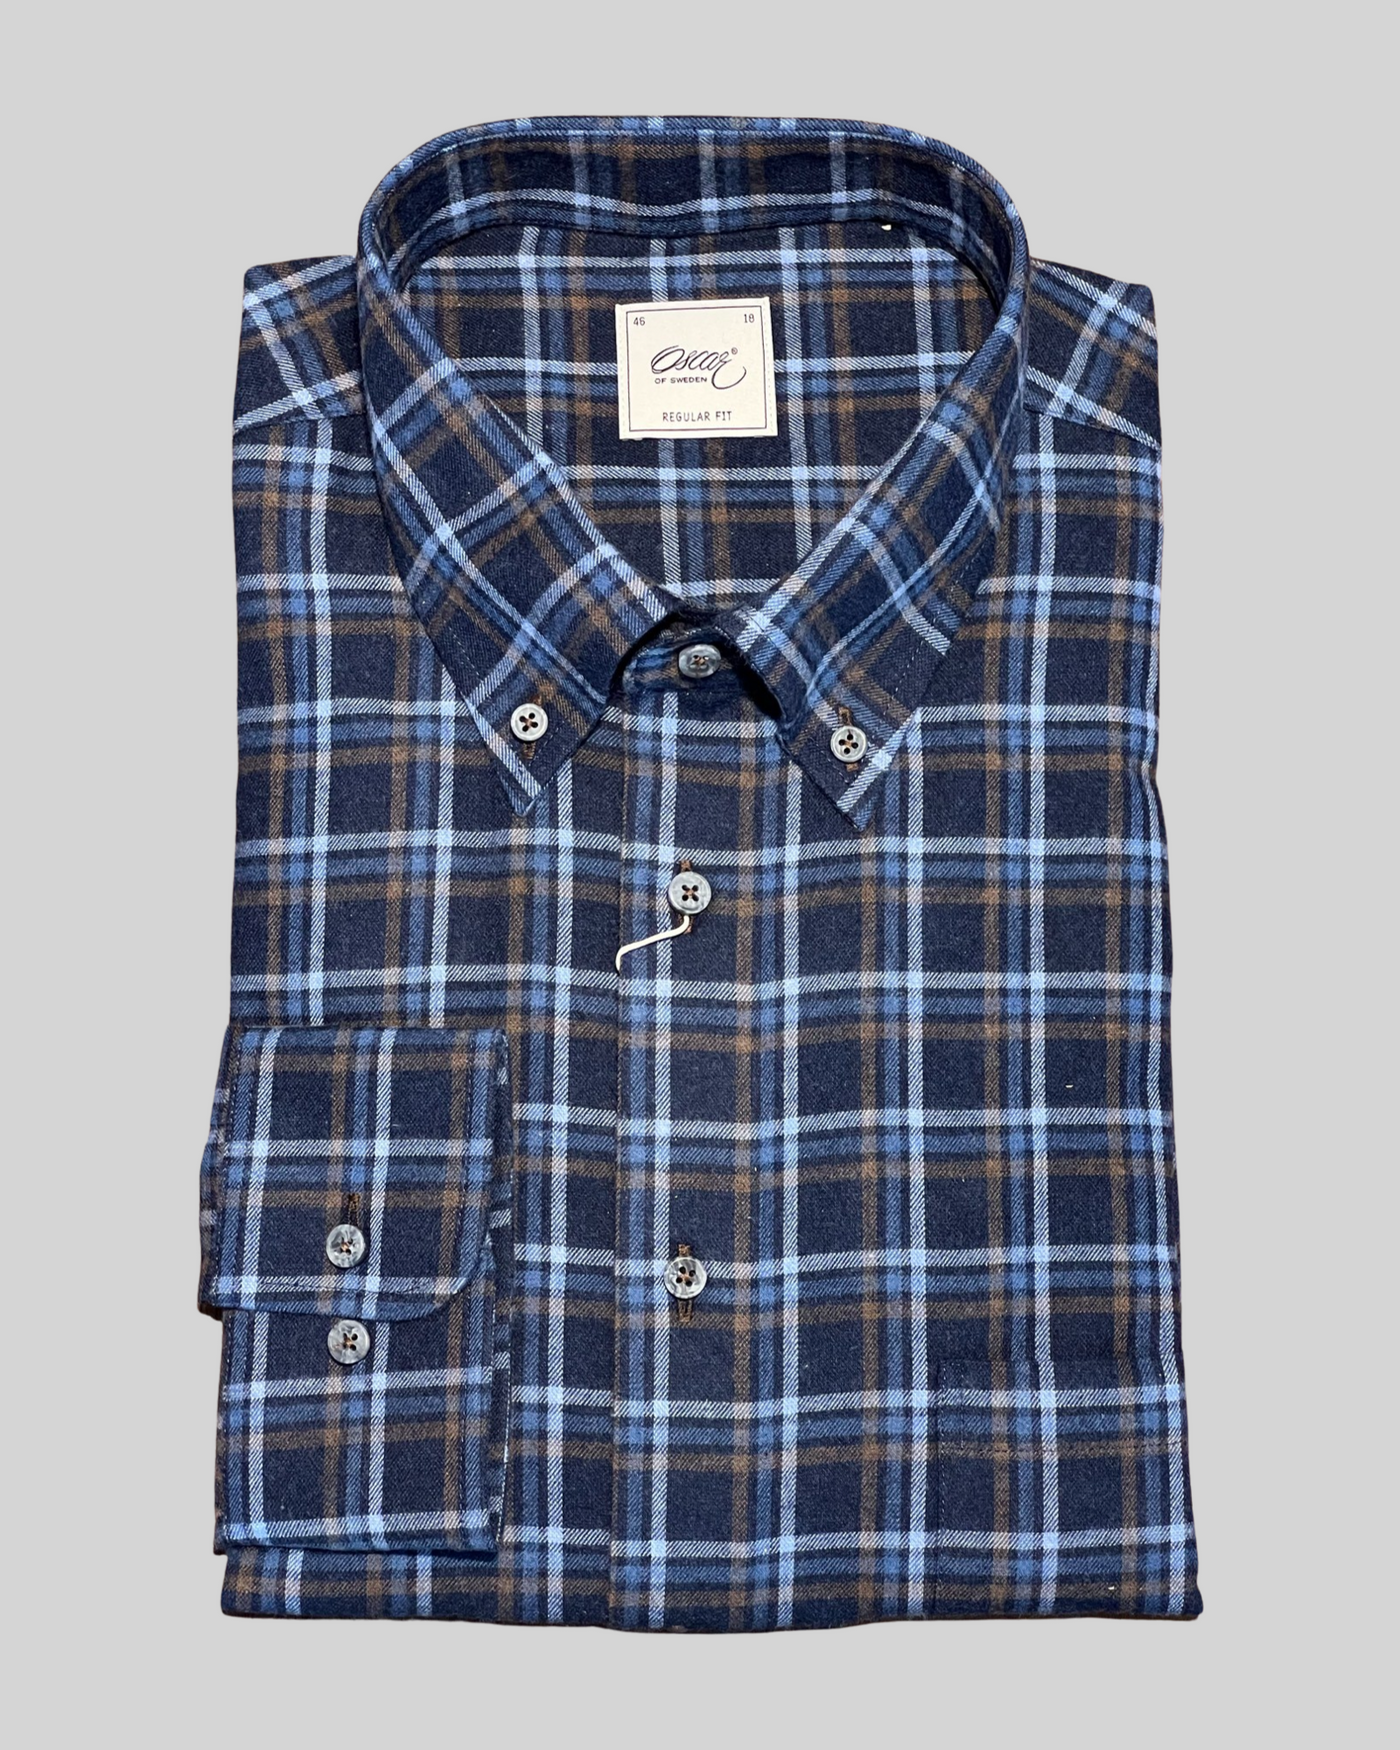 OSCAR OF SWEDEN Flannel Shirt | Indigo Blue Check